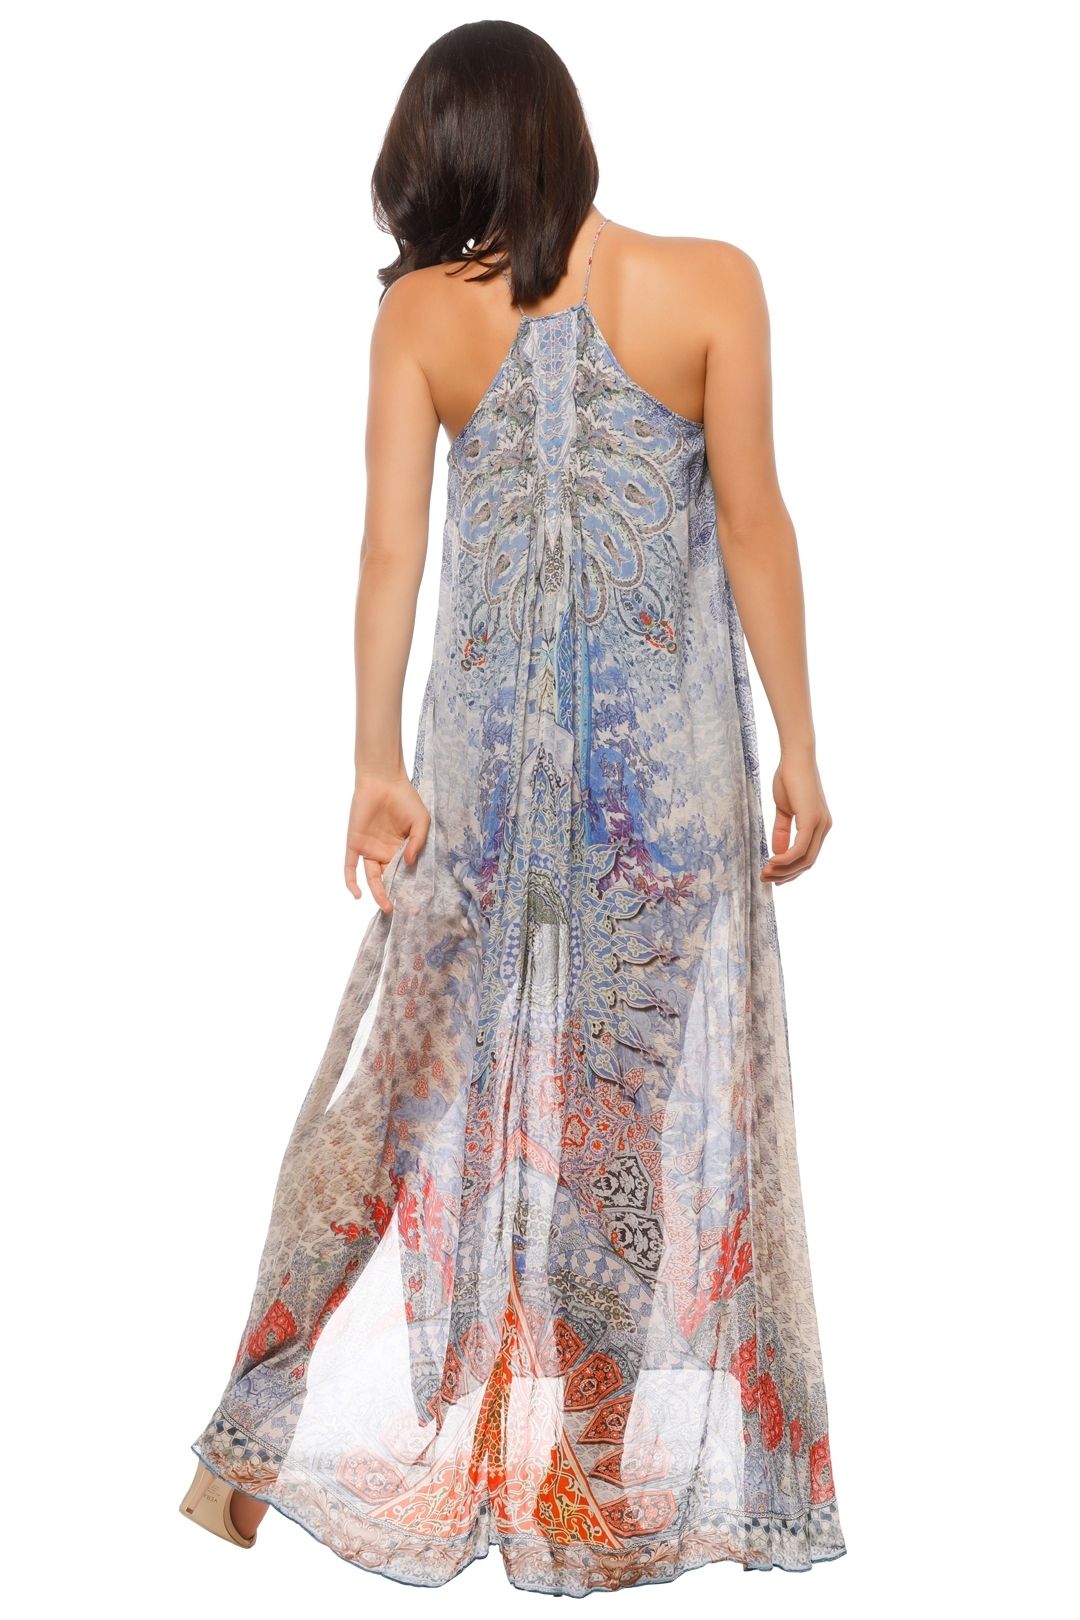 Camilla - Concubine Realm Sheer Overlay Dress - Blue Prints - Back